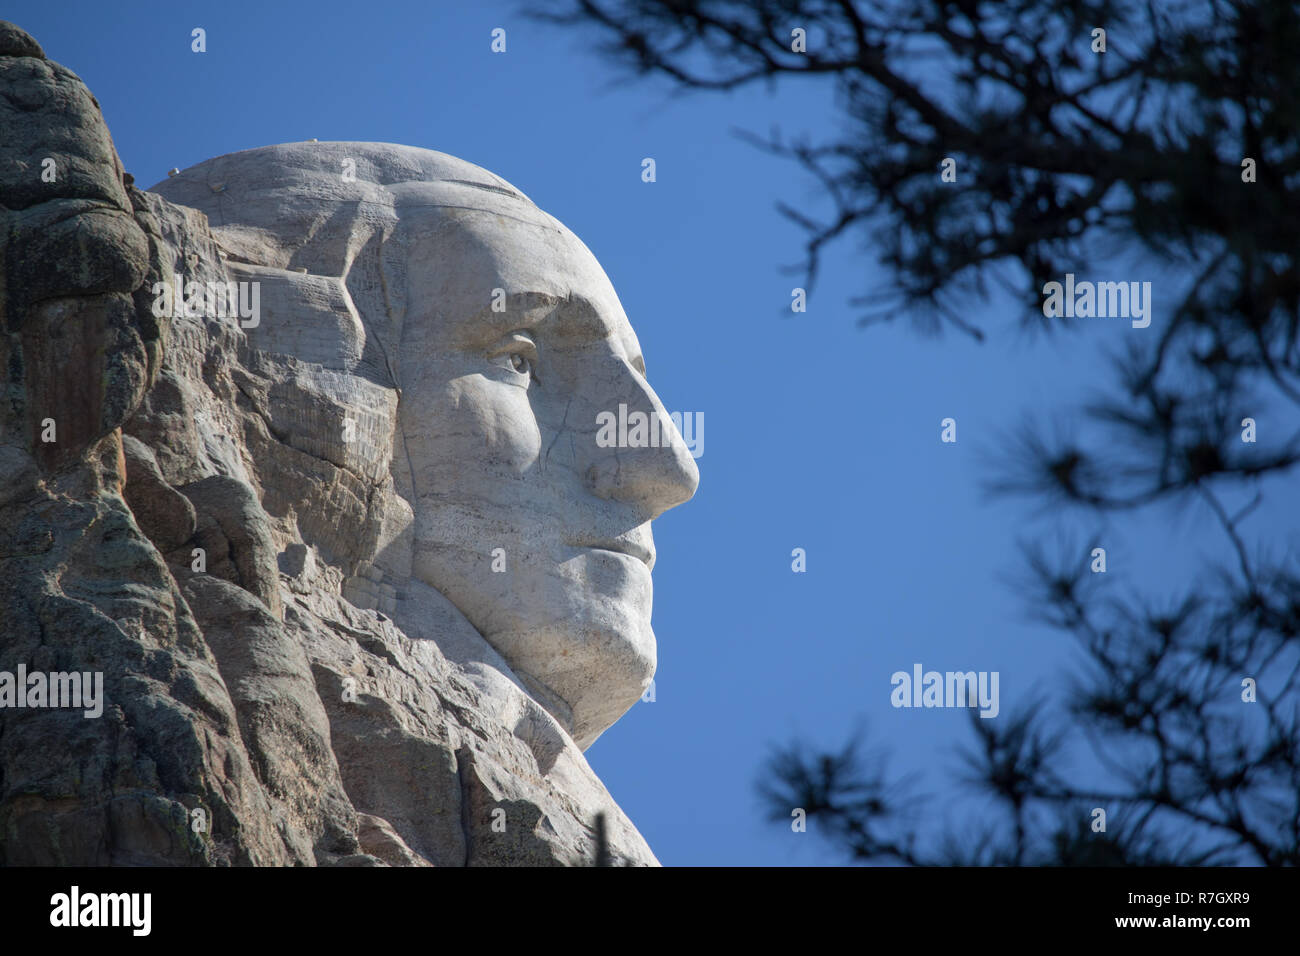 A profile view of George Washington's face on Mount Rushmore in South Dakota. Stock Photo